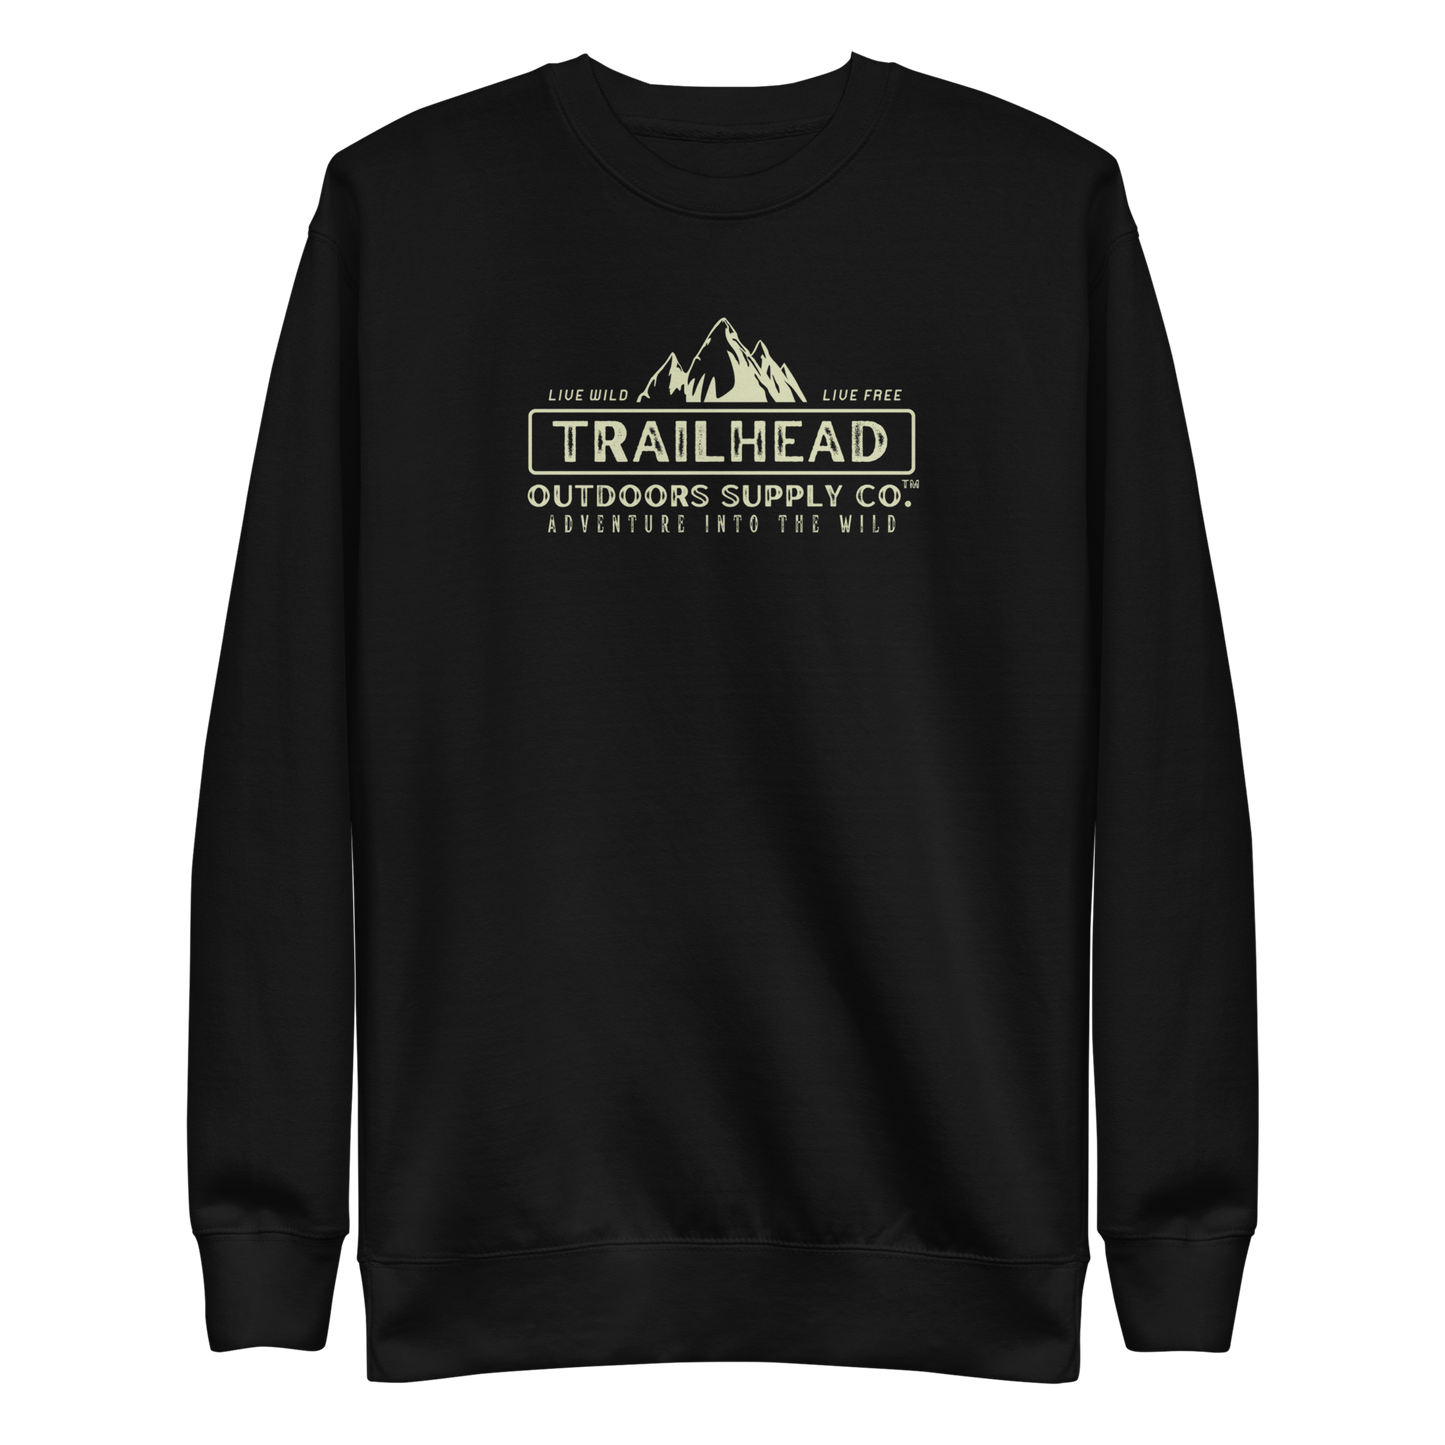 Trailhead Outdoors Supply Co.™ Premium Sweatshirt | Cotton Heritage M2480 | Front